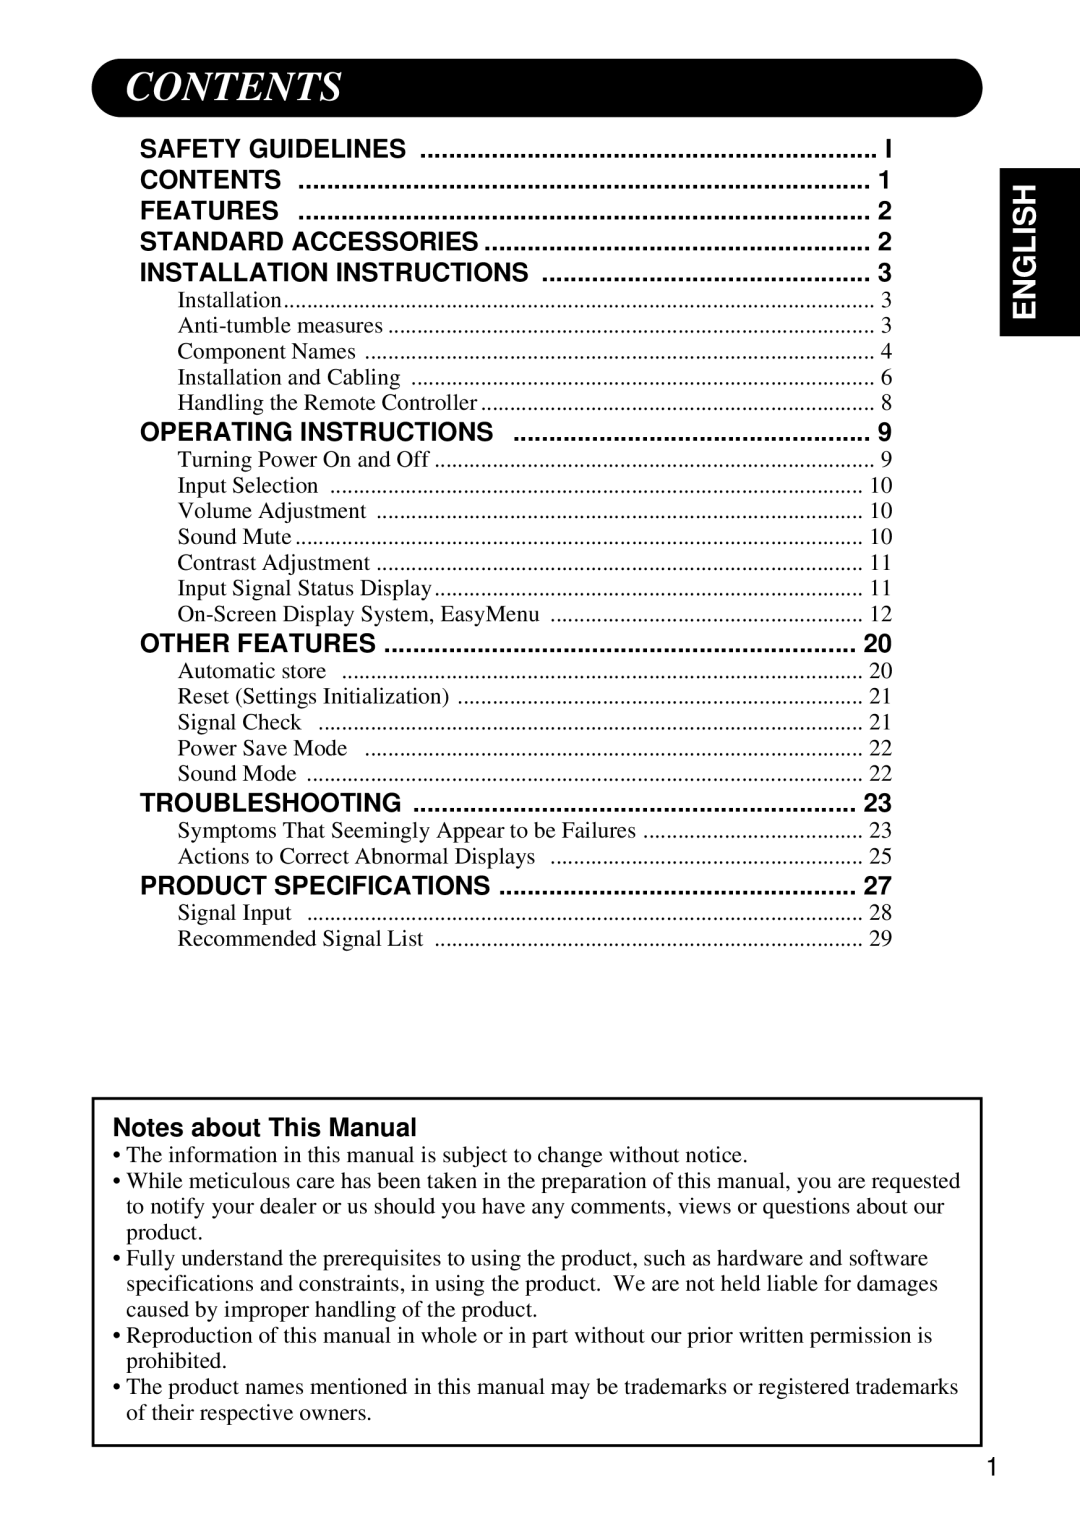 Hitachi Koki USA CMP4120HDUS user manual Contents, Notes about This Manual, English 